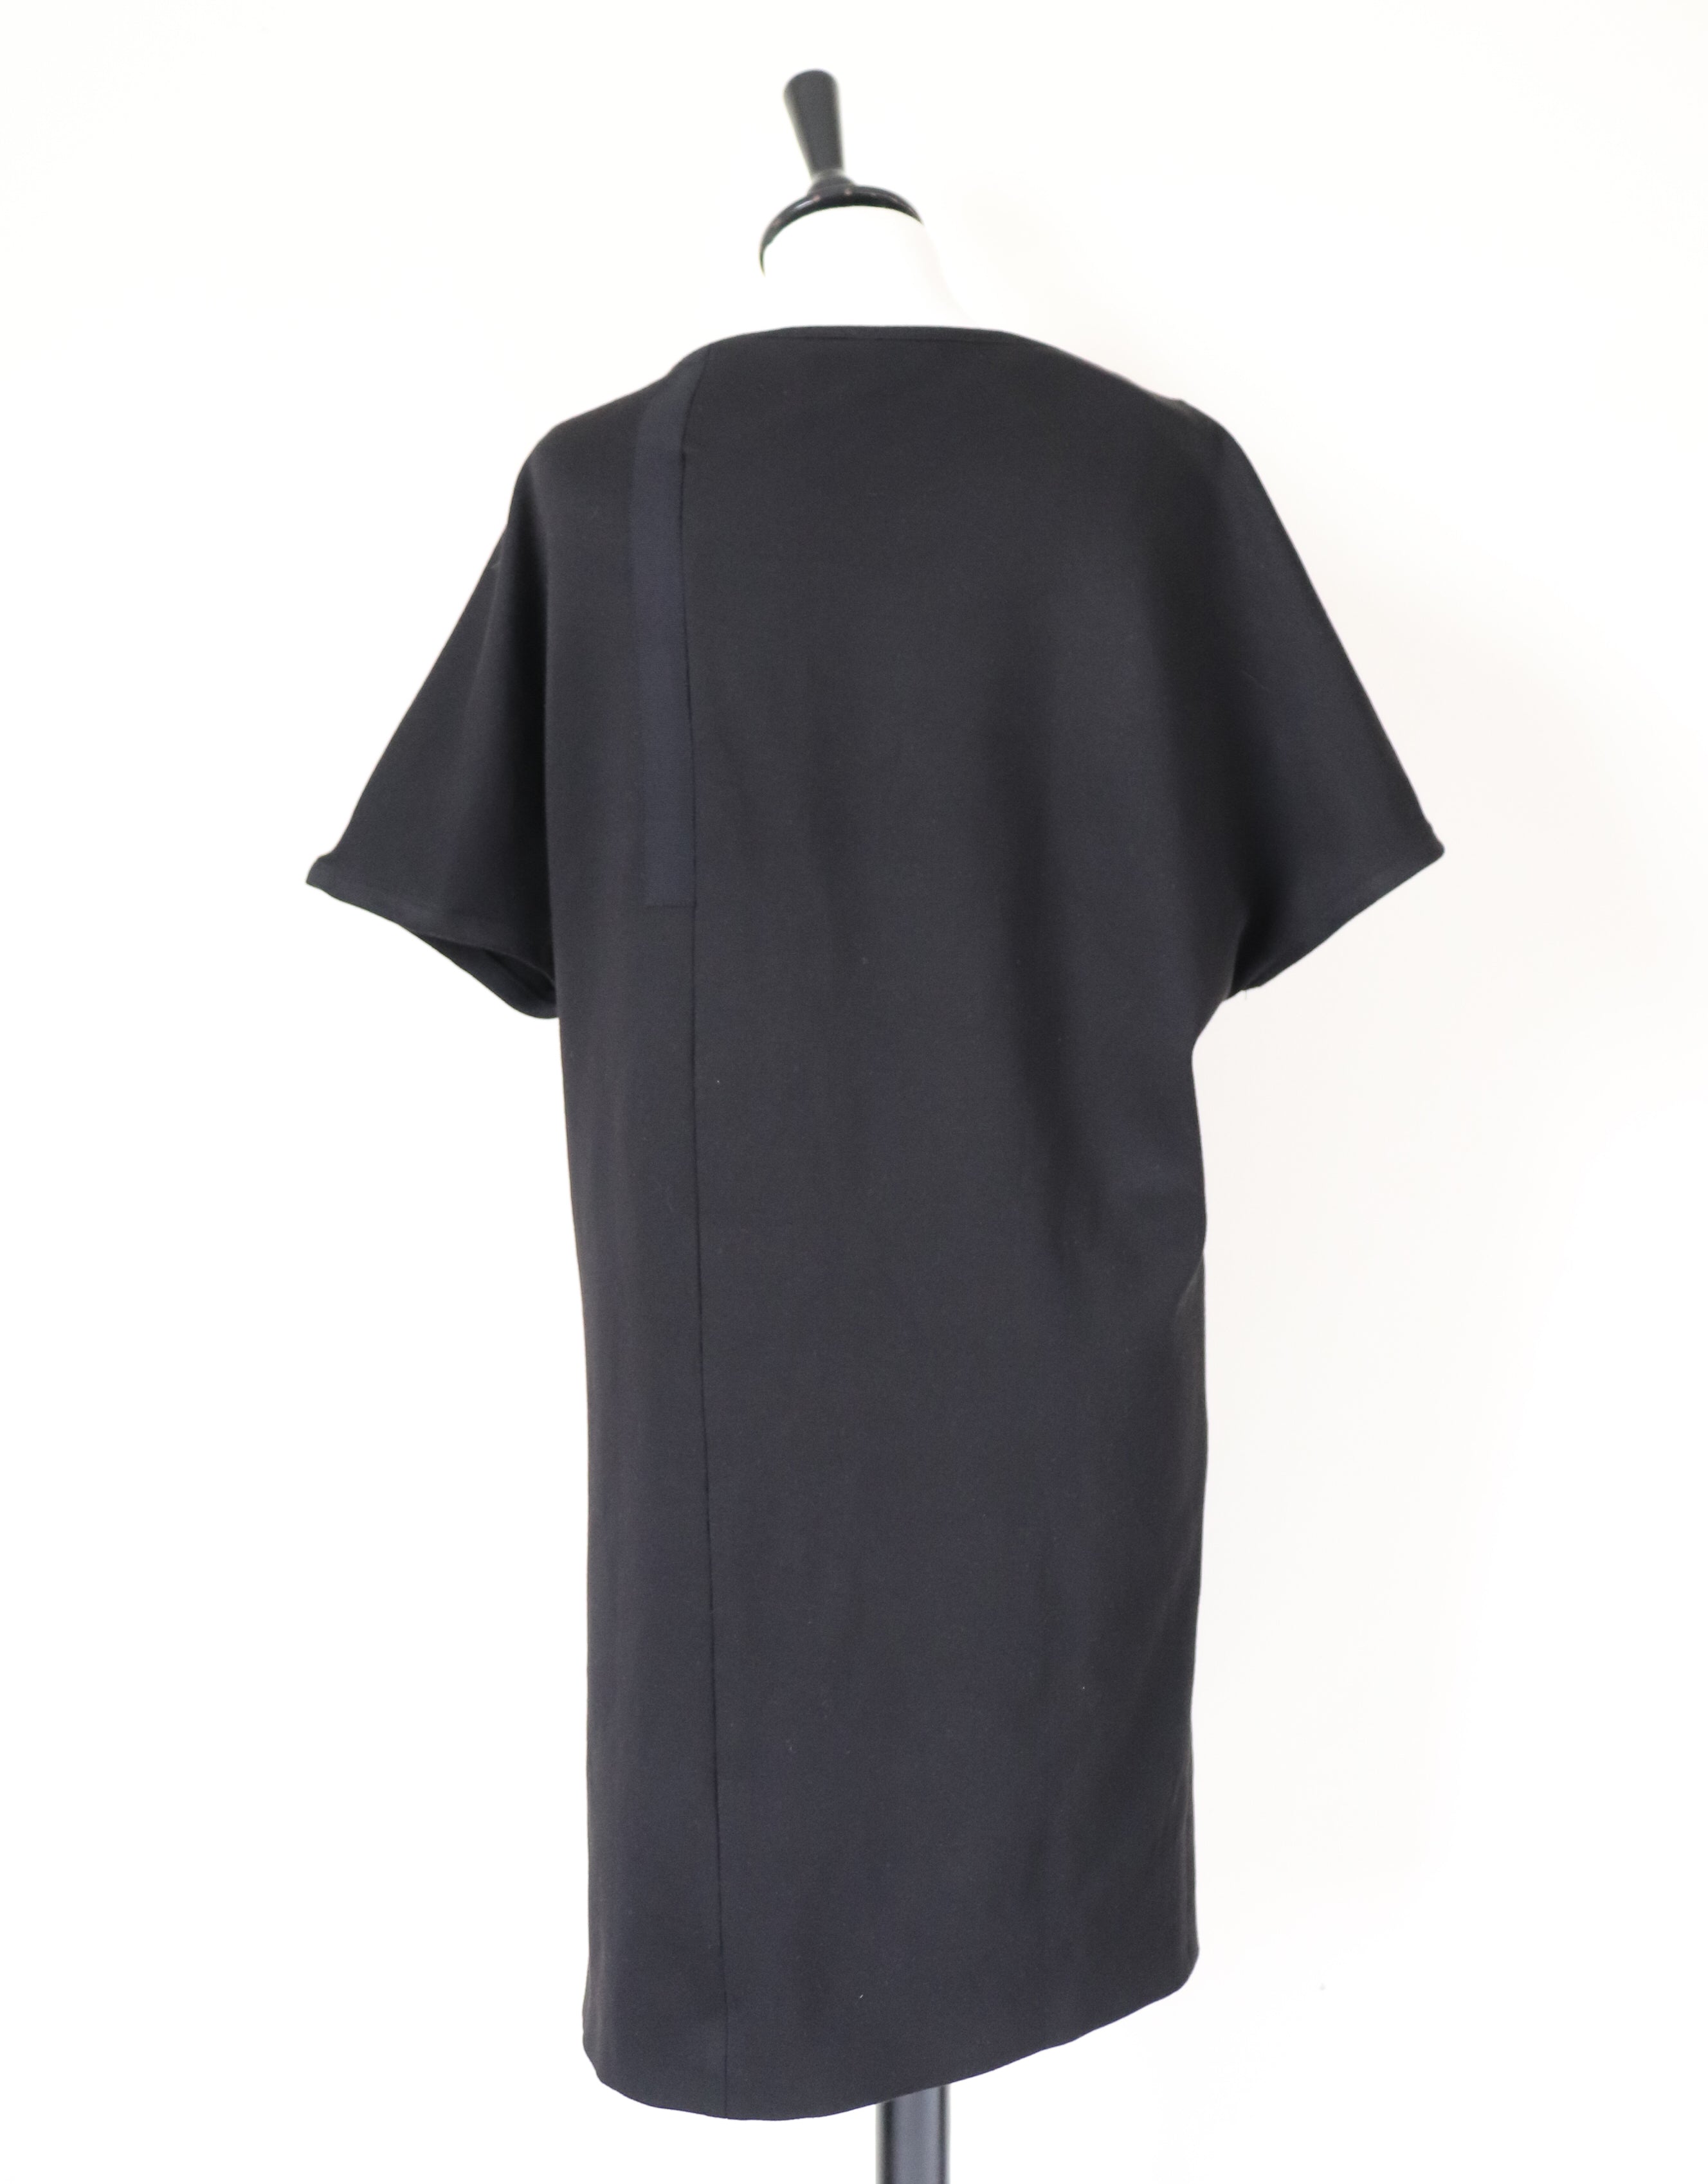 Cacharel Black Dress - Short Sleeve - Stretchy - Label F36 / GB 8 - Fit UK 10 / 12